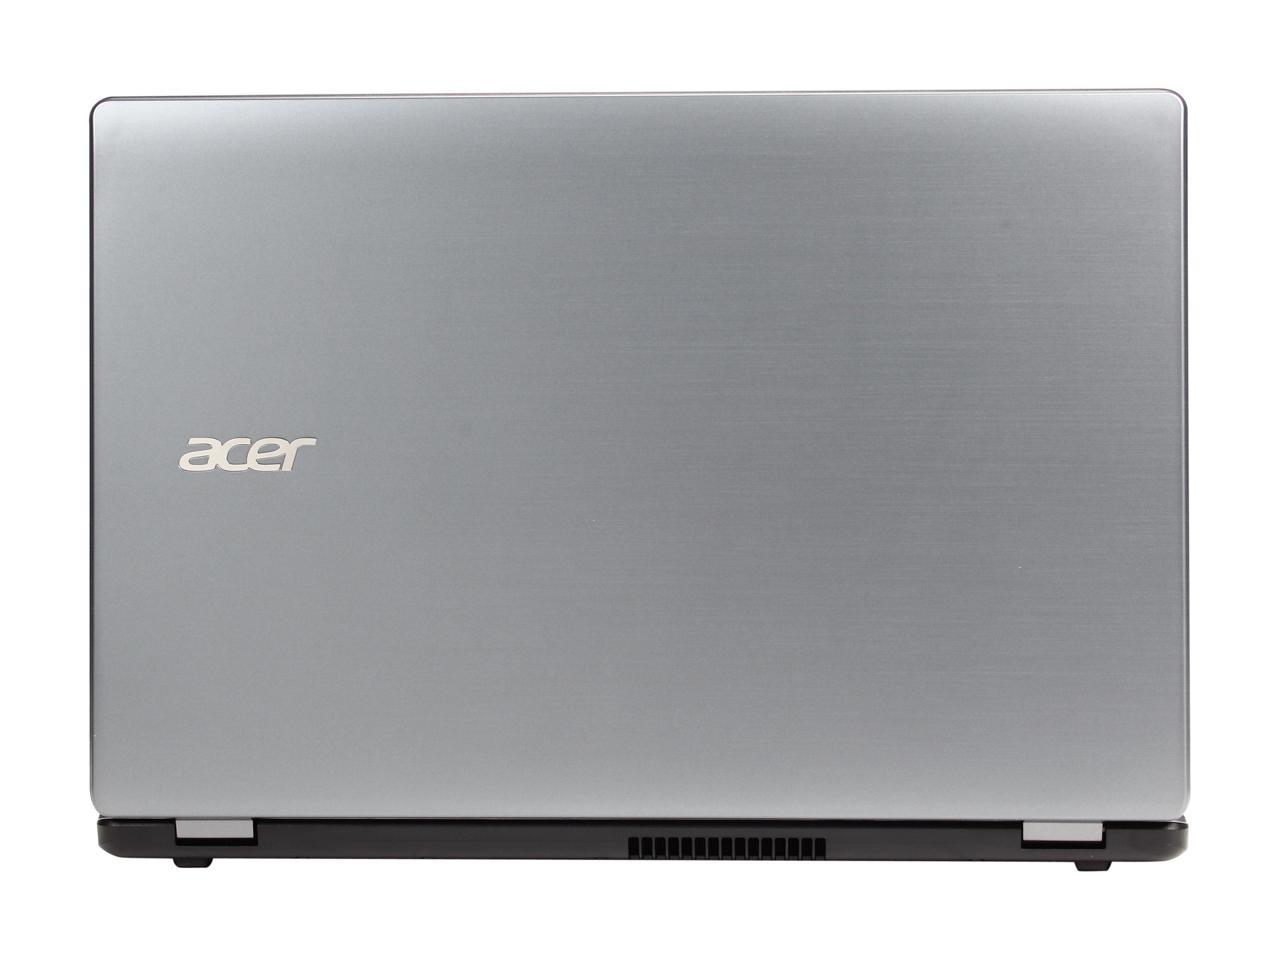 Acer Laptop Intel Pentium 3556U (1.70GHz) 4GB Memory 500GB HDD Intel HD